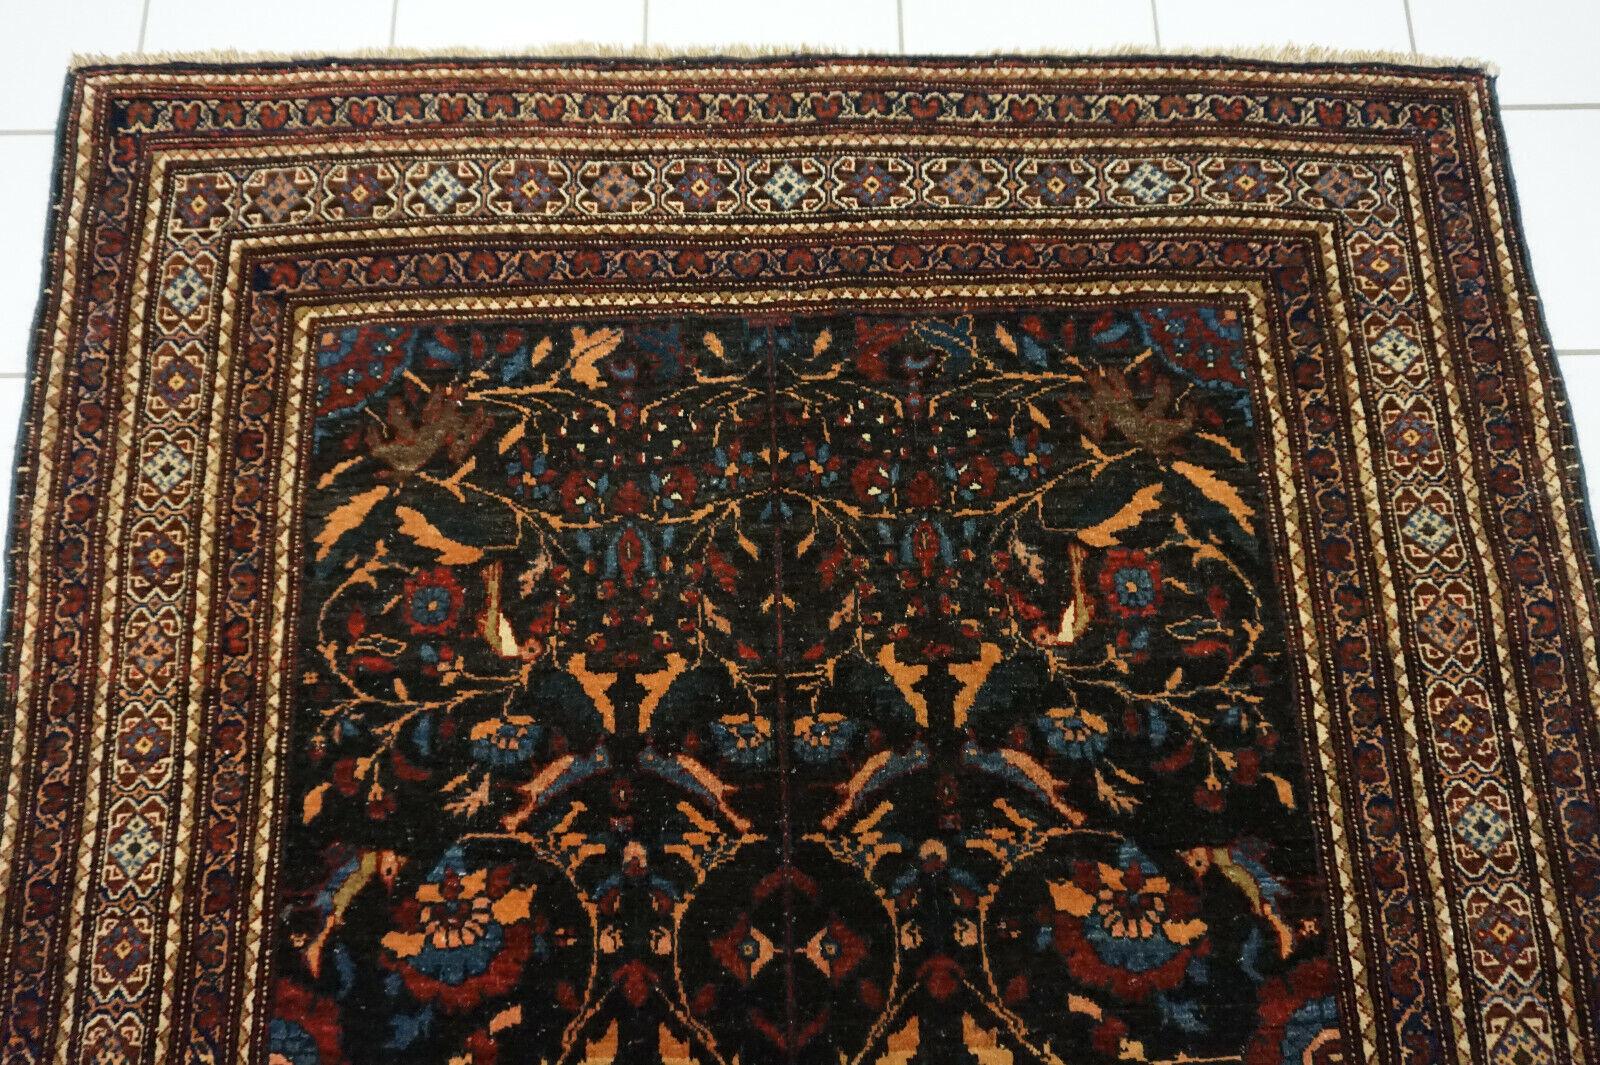 Wool Handmade Antique Persian Tehran Rug 3.6' x 5.1', 1920s - 1D59 For Sale